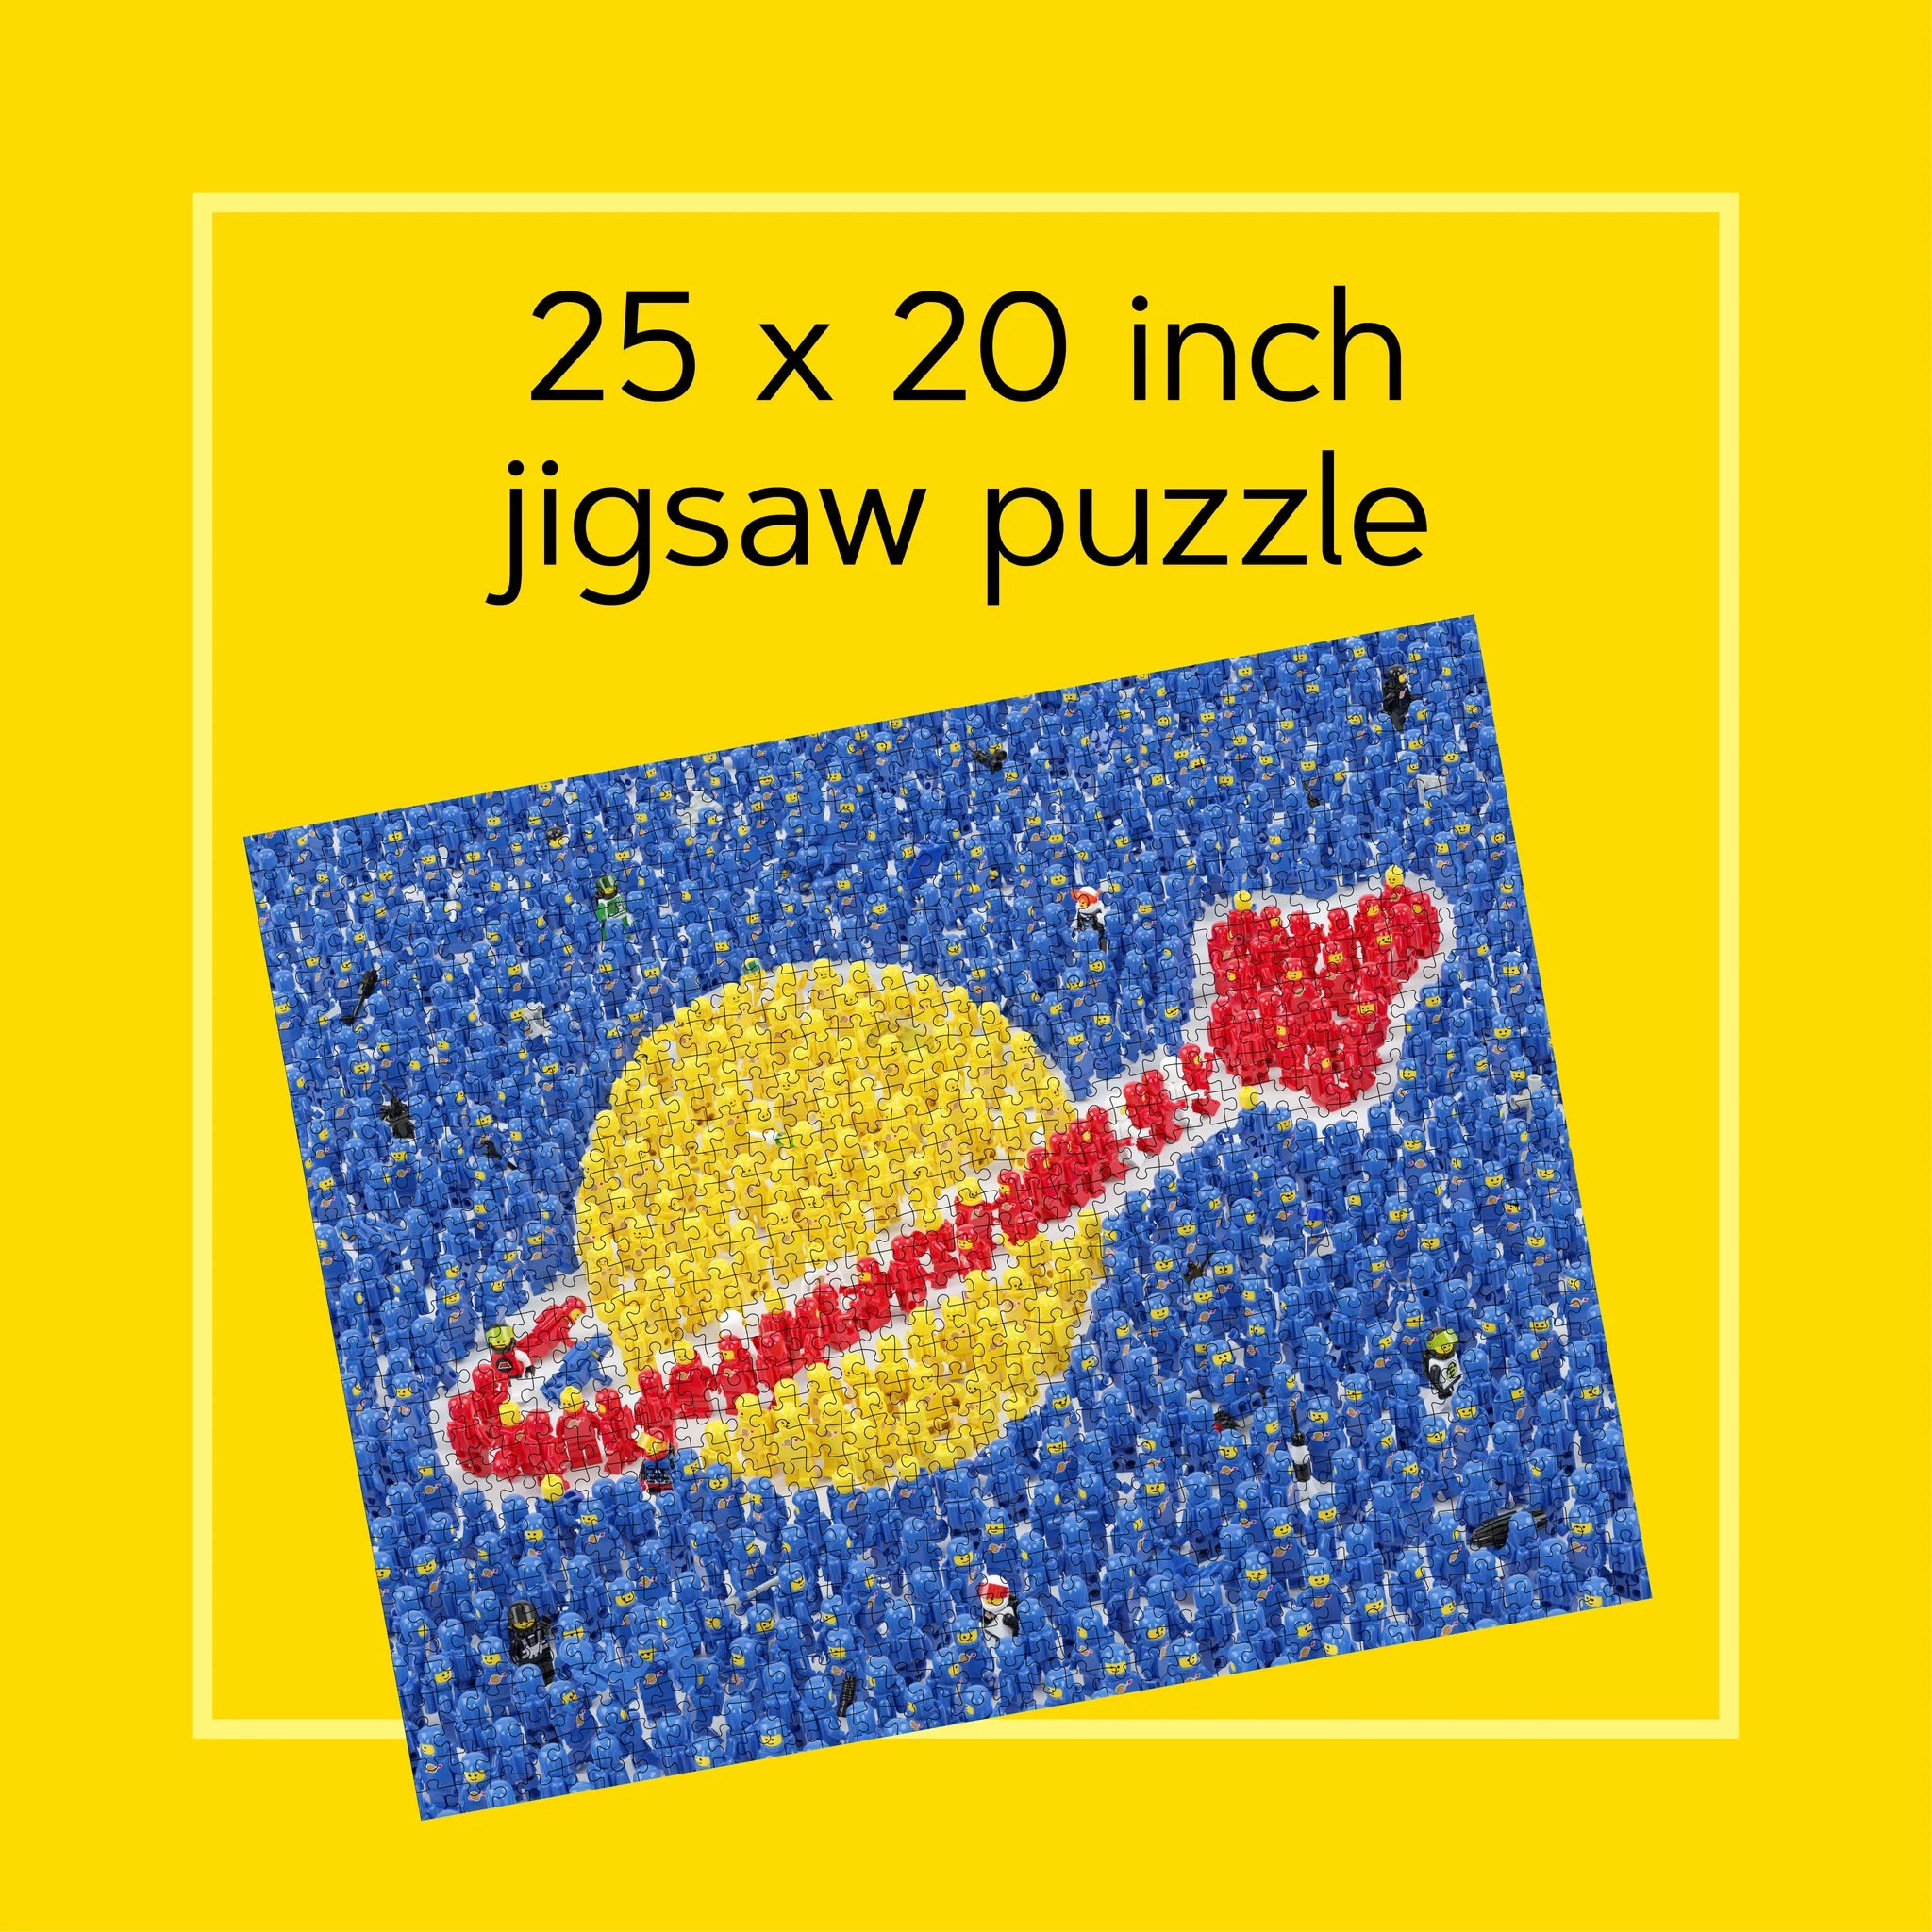 LEGO IDEAS Minifigure Space Mission 1000-Piece Puzzle